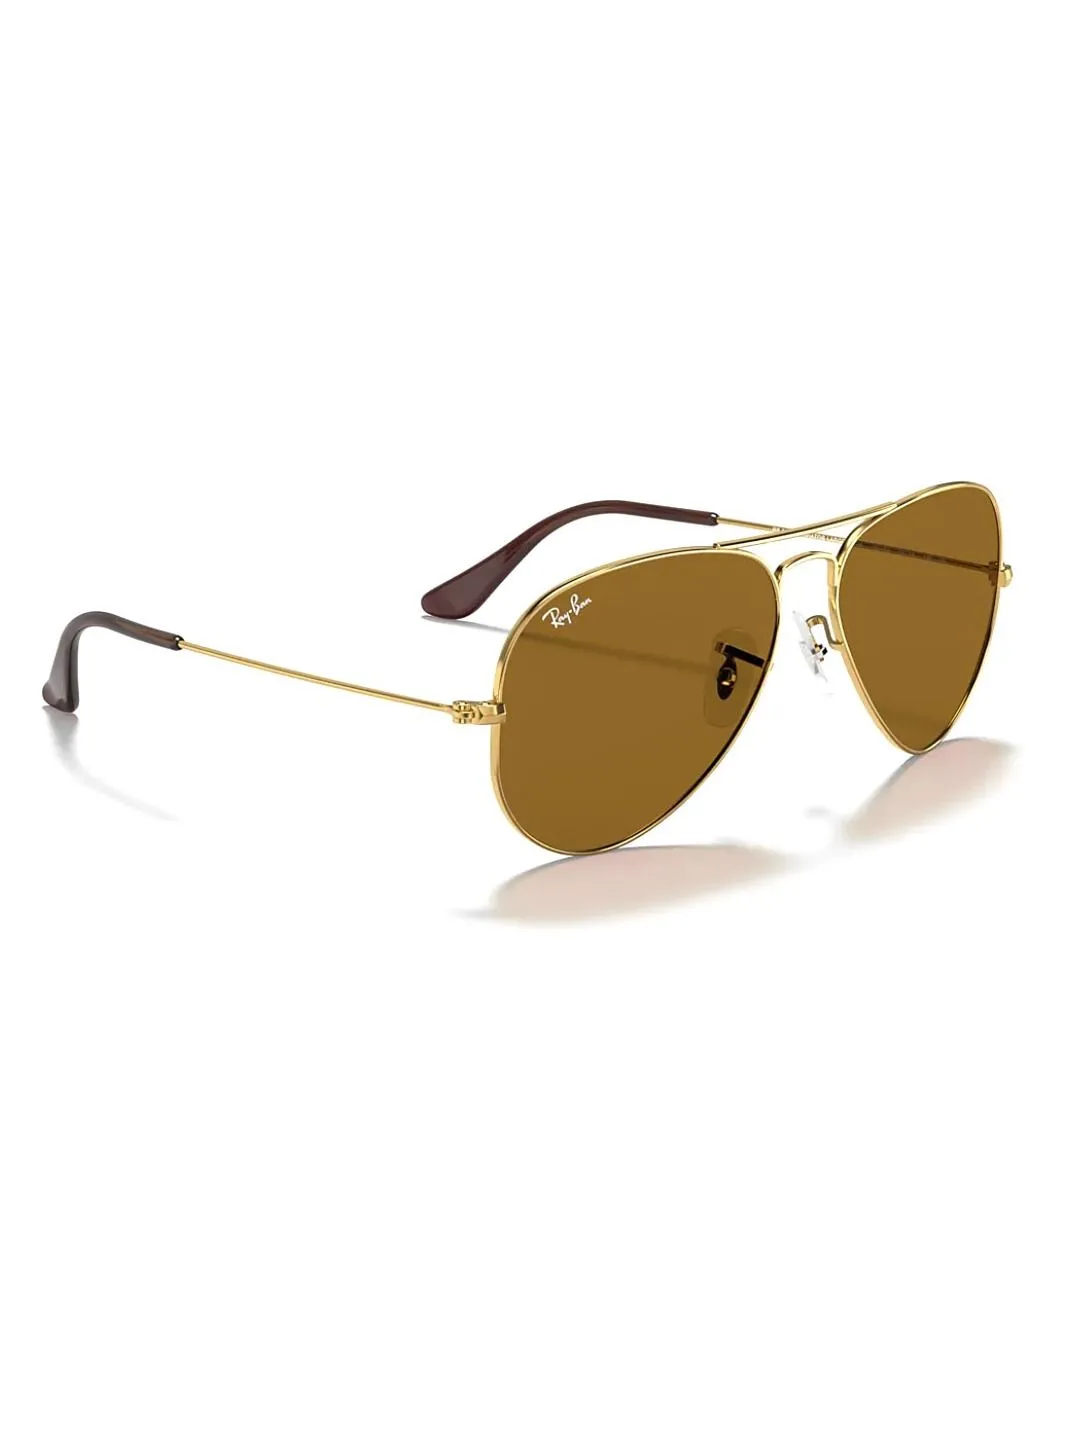 Ray-Ban Aviator classic sunglasses-lens size:58mm